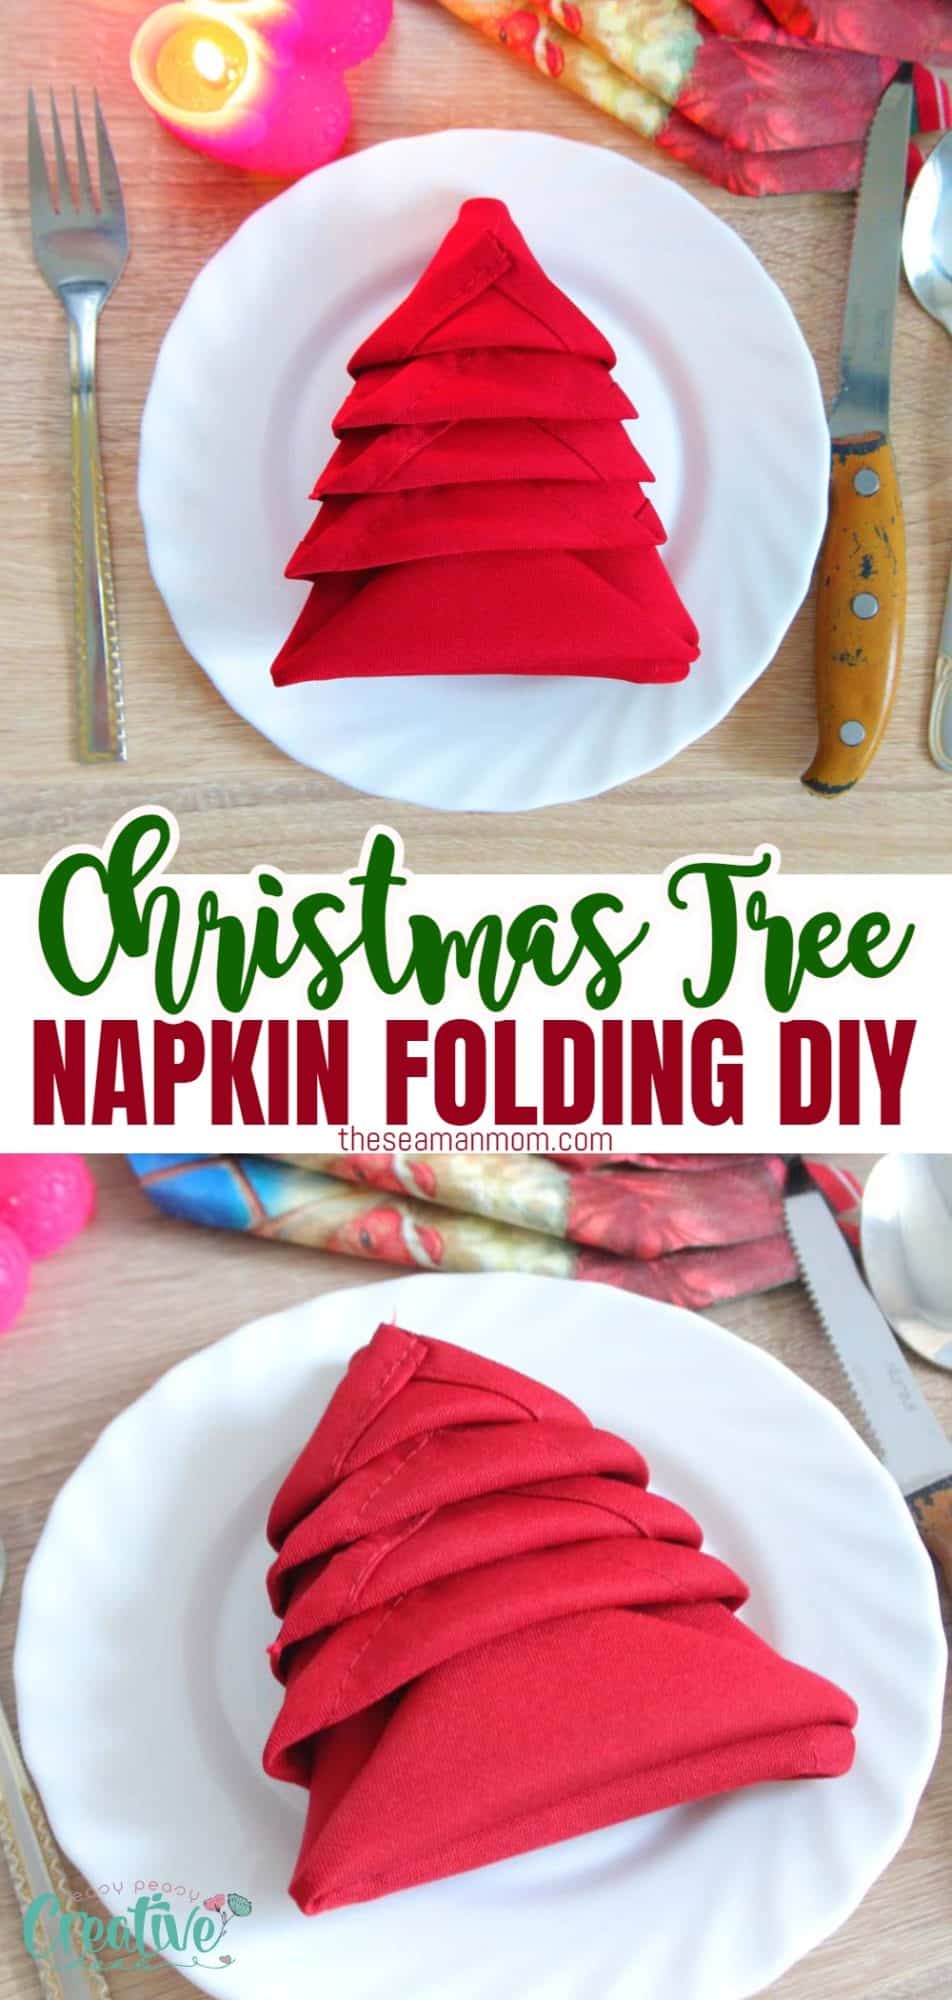 Christmas napkin folding DIY